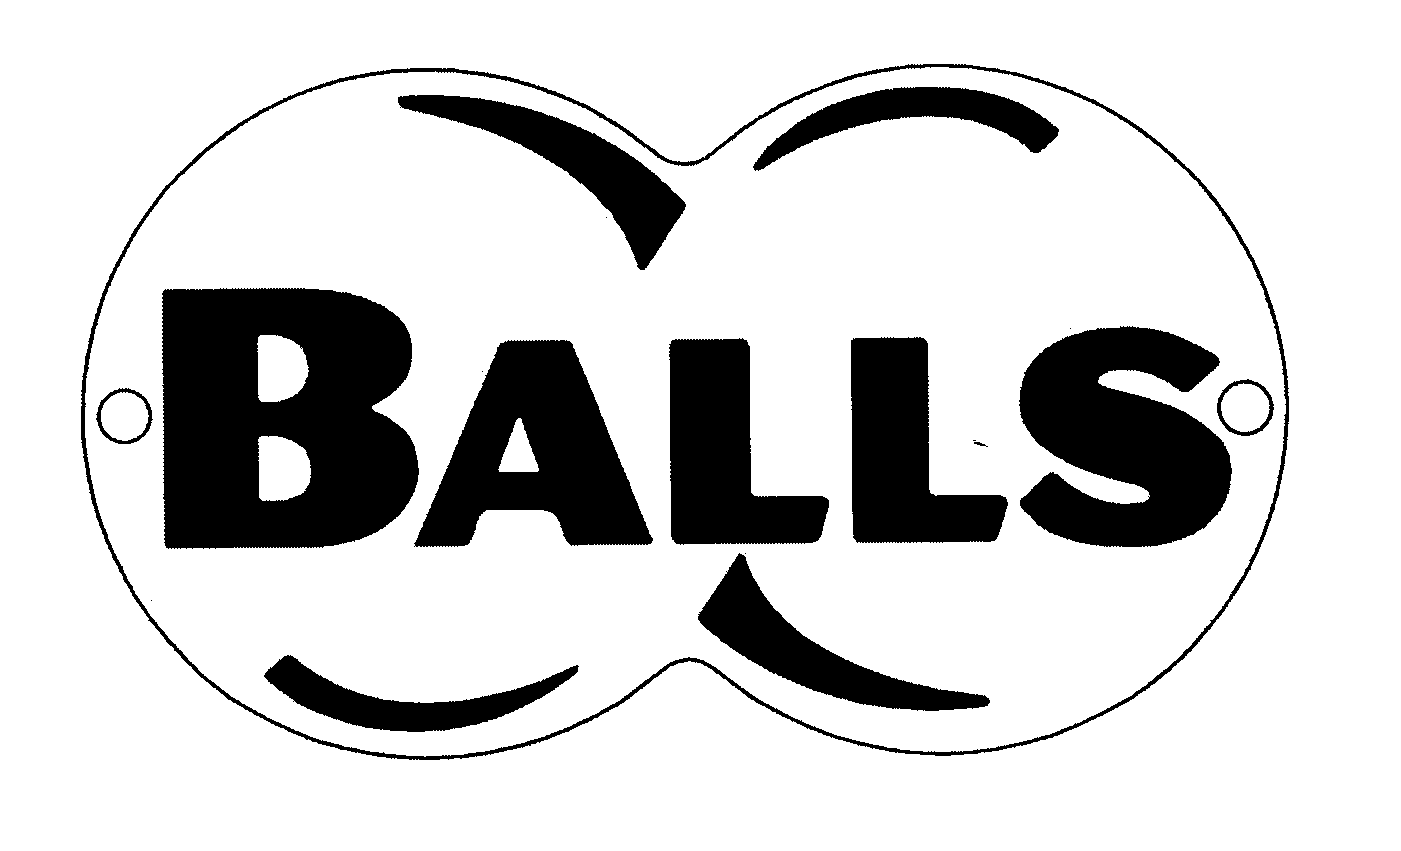 BALLS